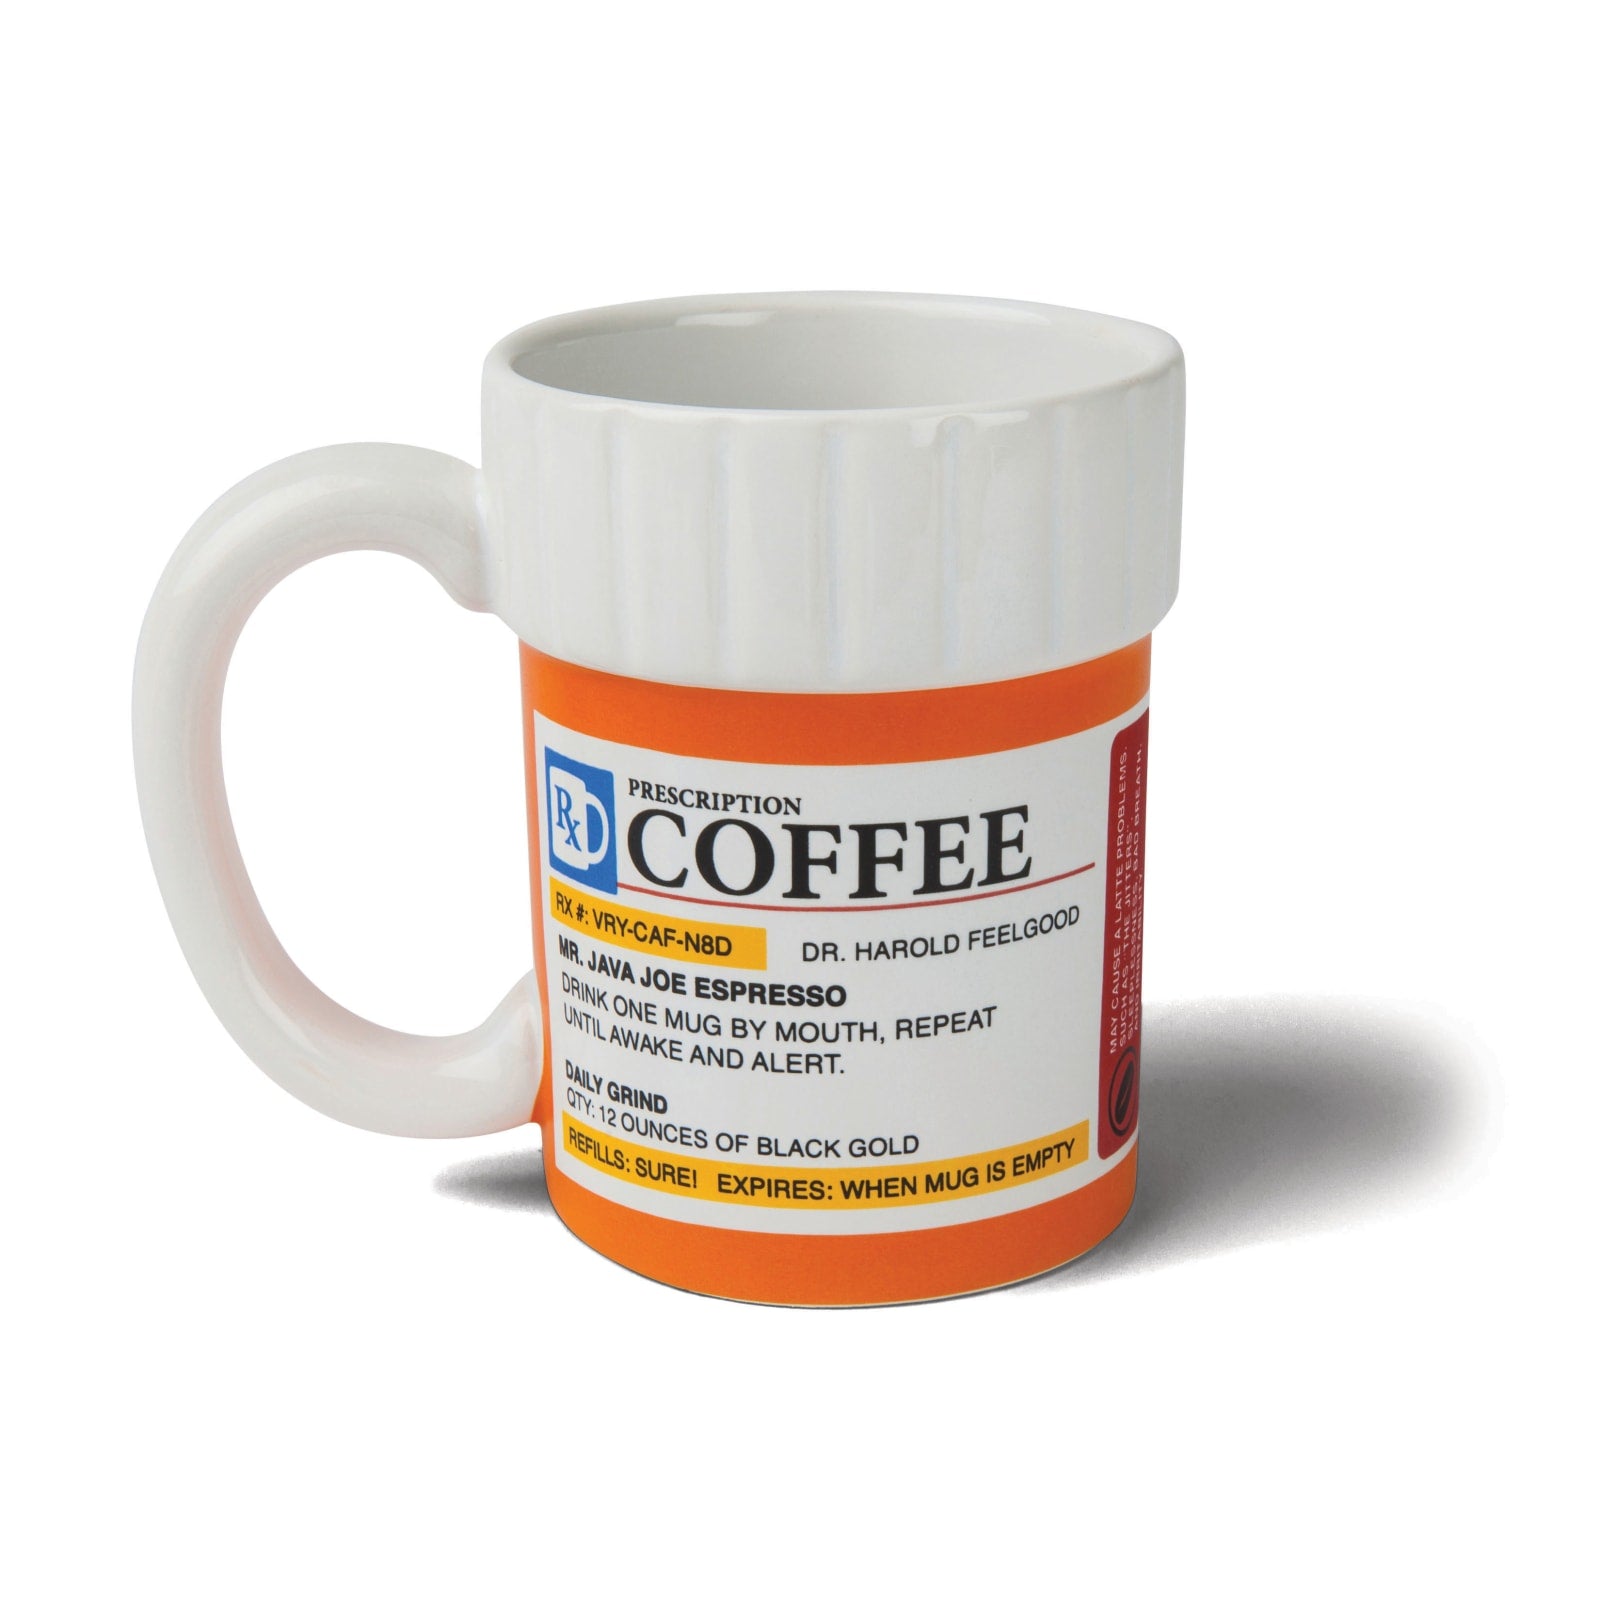 700ML Ceramic Big Coffee Milk Mug Breakfast Cup With Handgri Travel Mug  Novelty Gifts Best For Your Friends кружки canecas